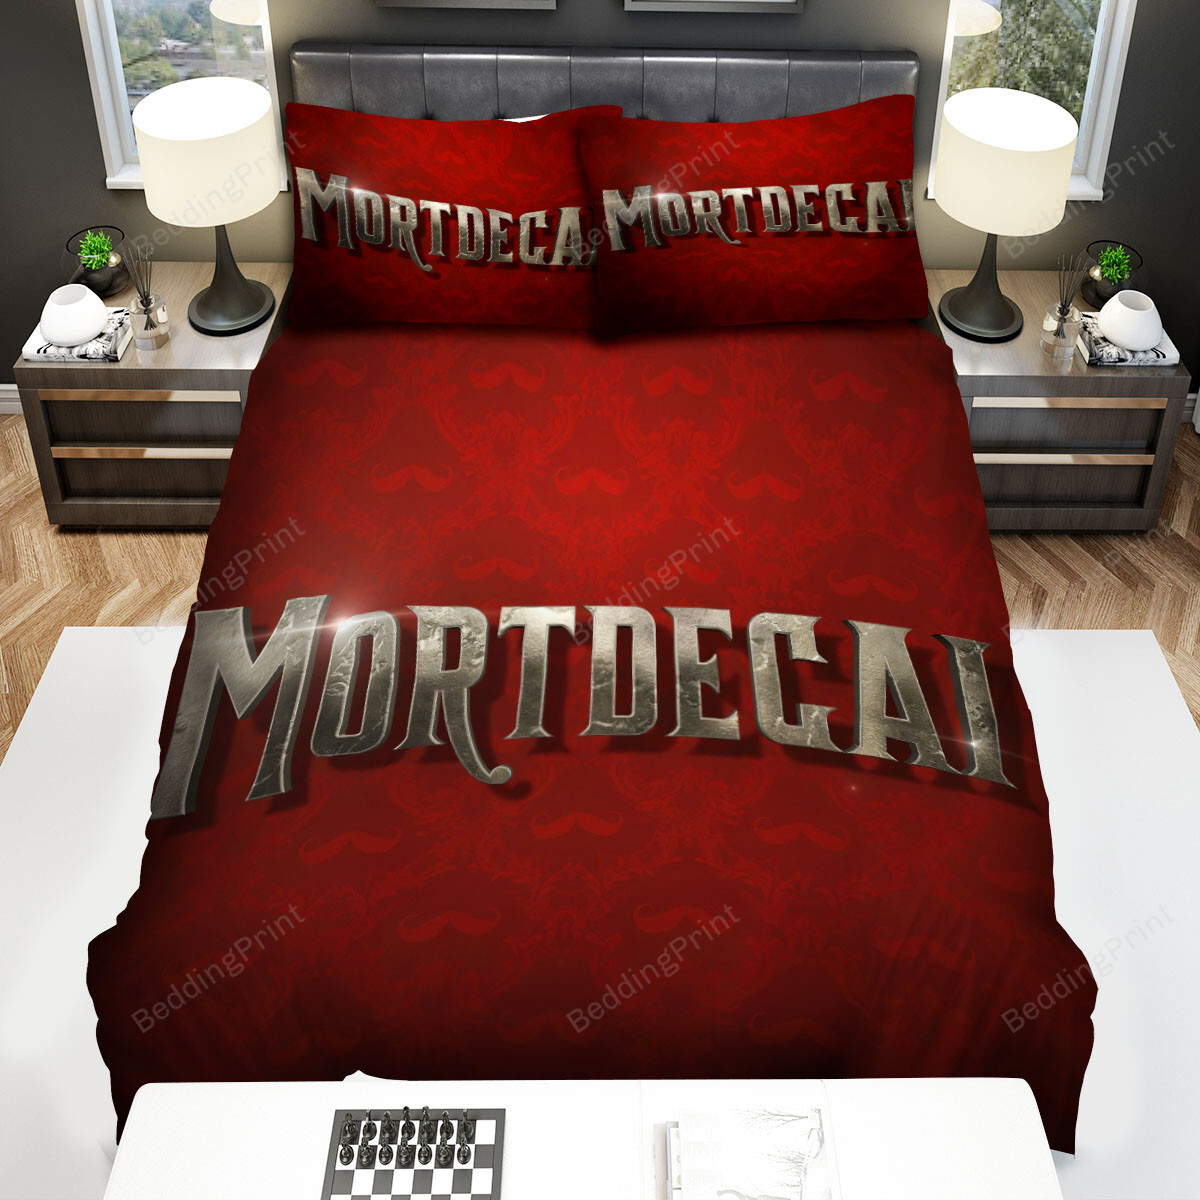 Mortdecai Movie Logo Bed Sheets Spread Comforter Duvet Cover Bedding Sets